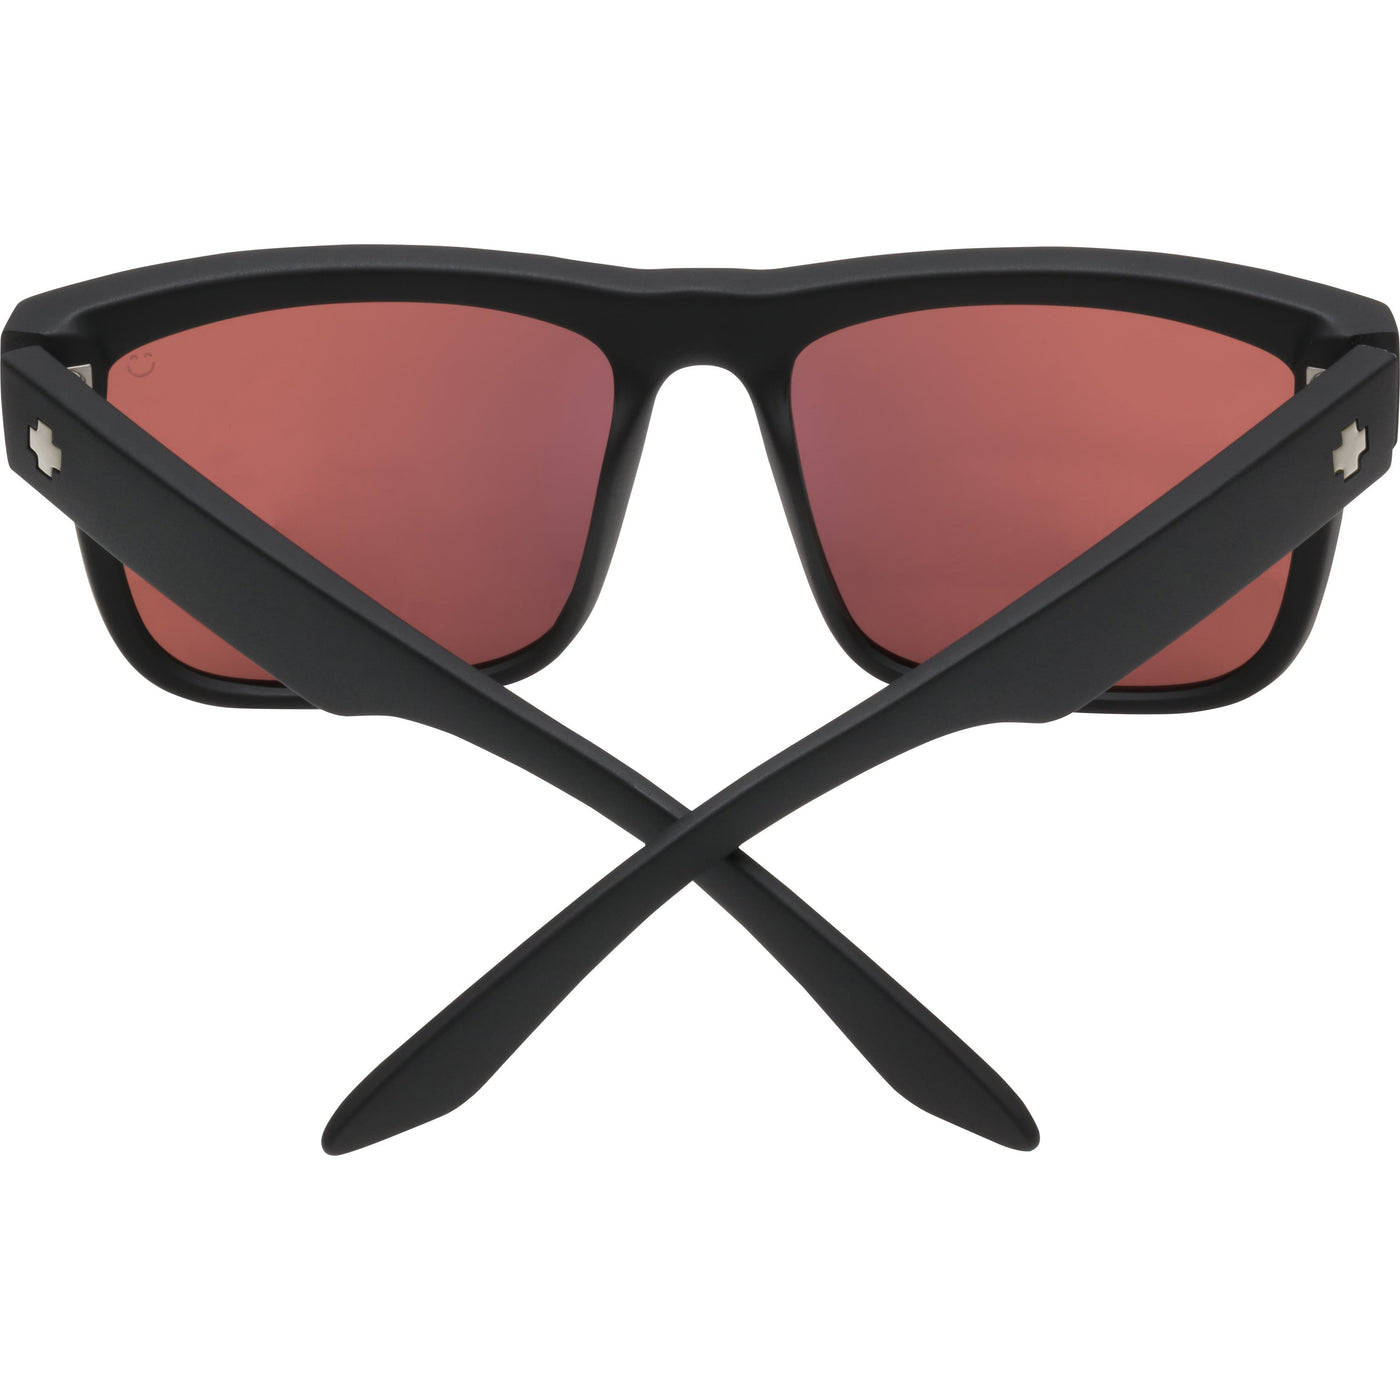 Black Spectra Mirror Polarized sunglasses